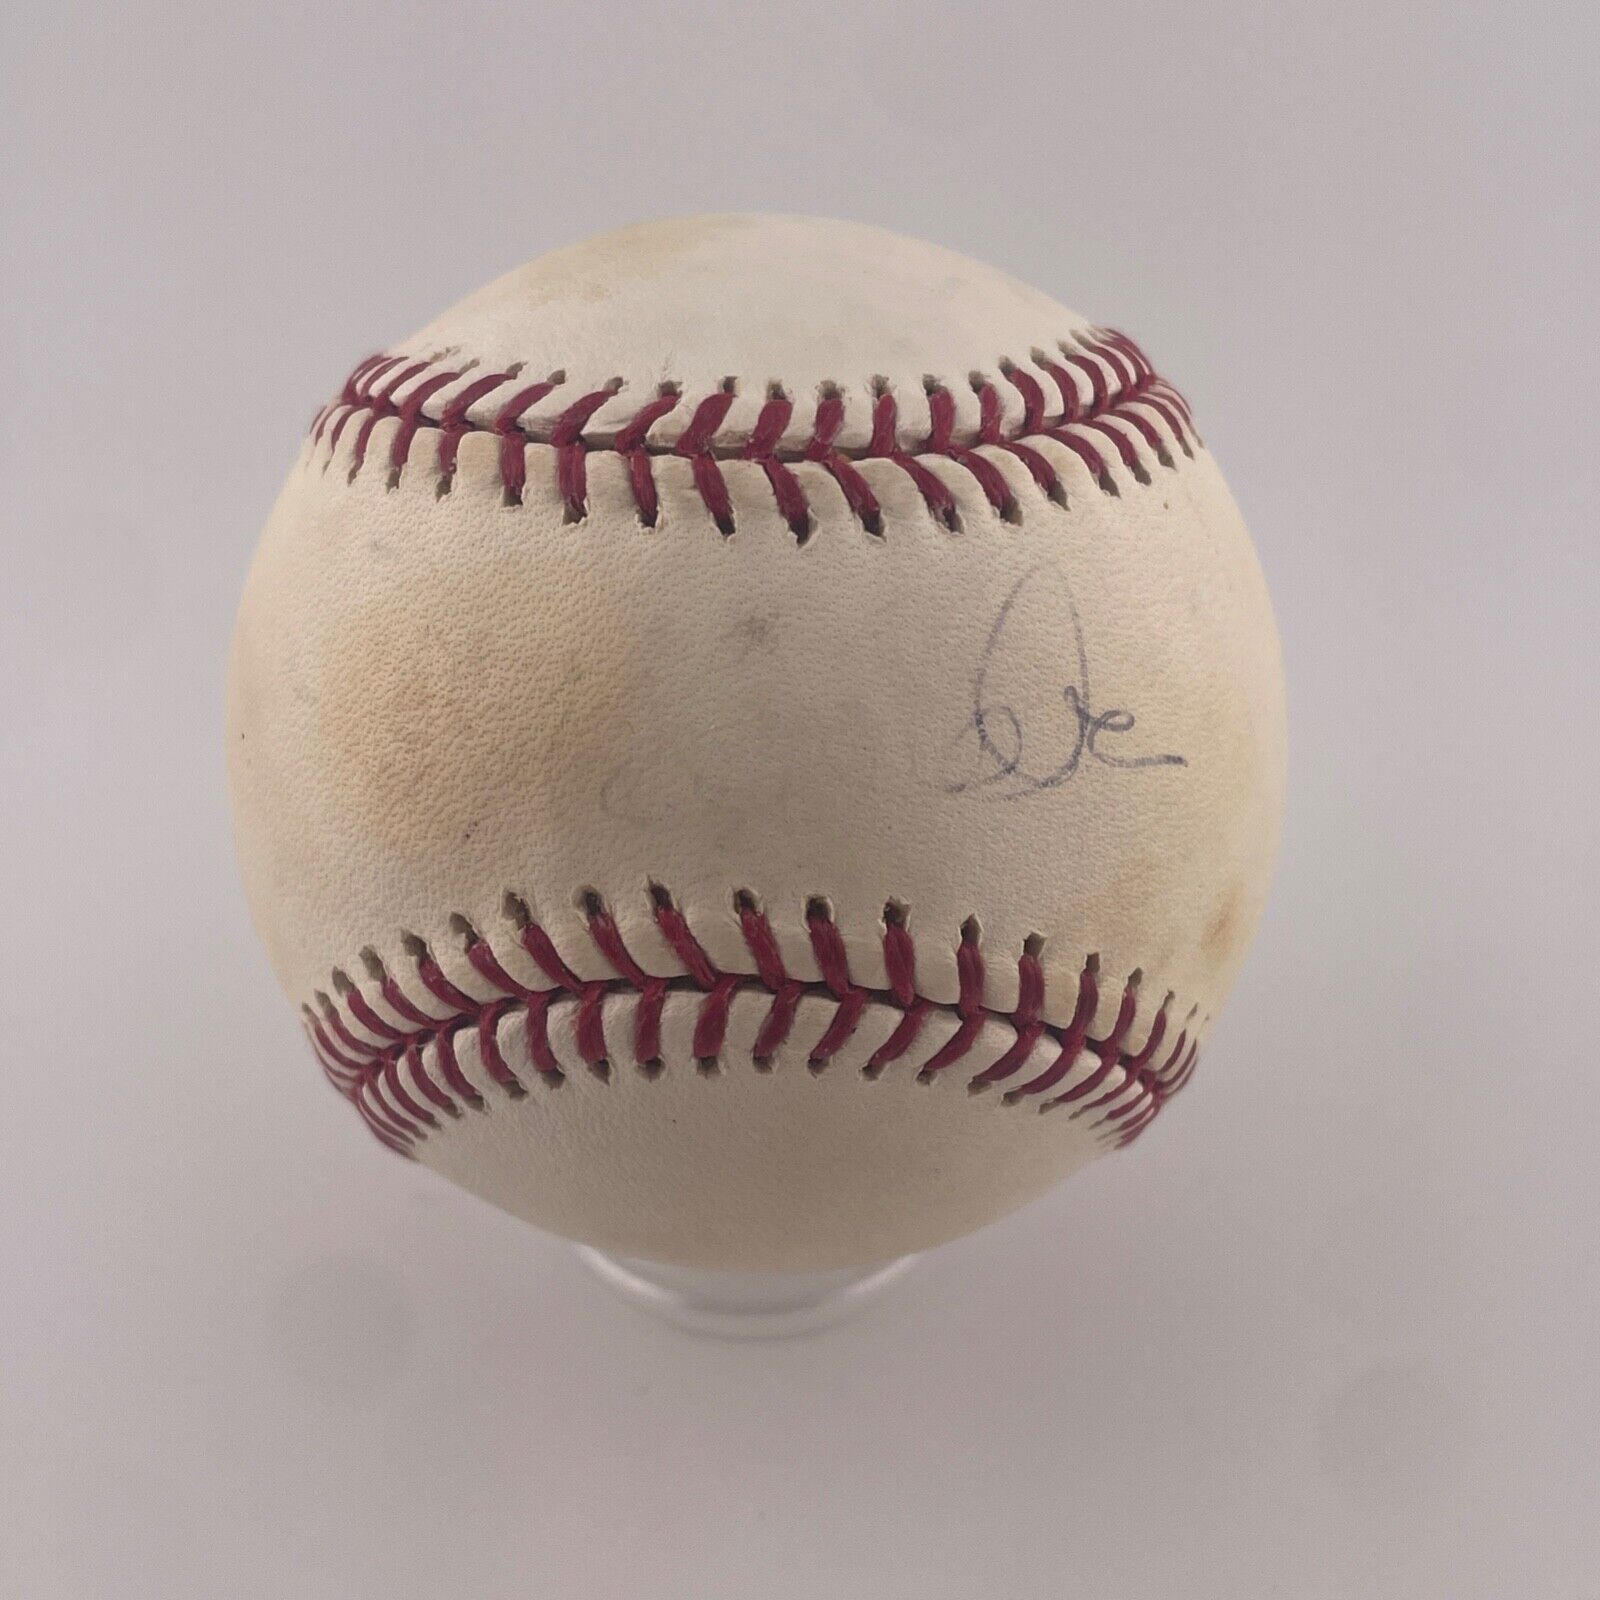 Derek Jeter Signed Baseball Partial Autograph, Faded.